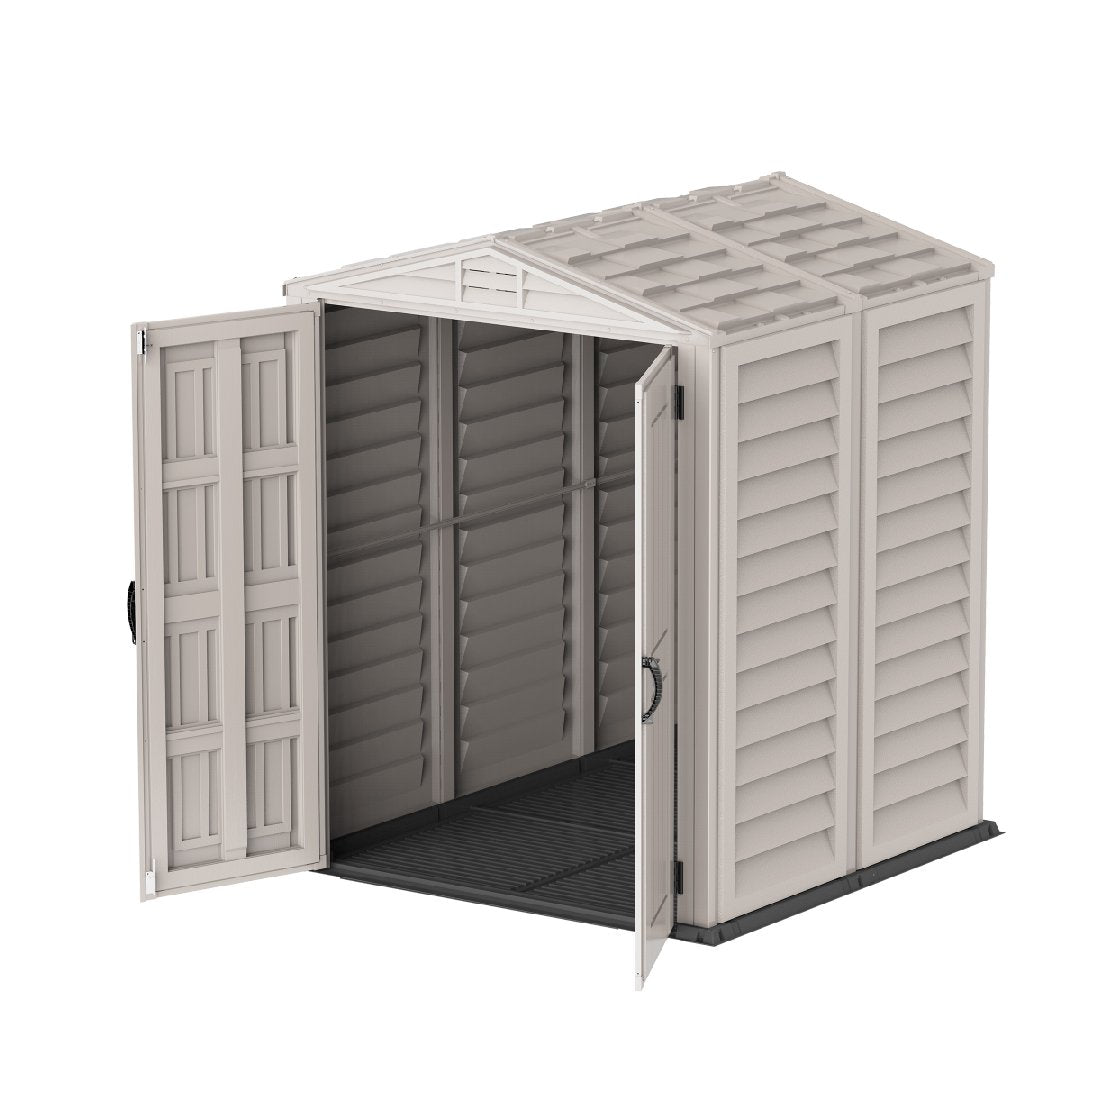 Walk-in Garden & Outdoor Storage Shed 5x5ft- Cosmoplast KSA